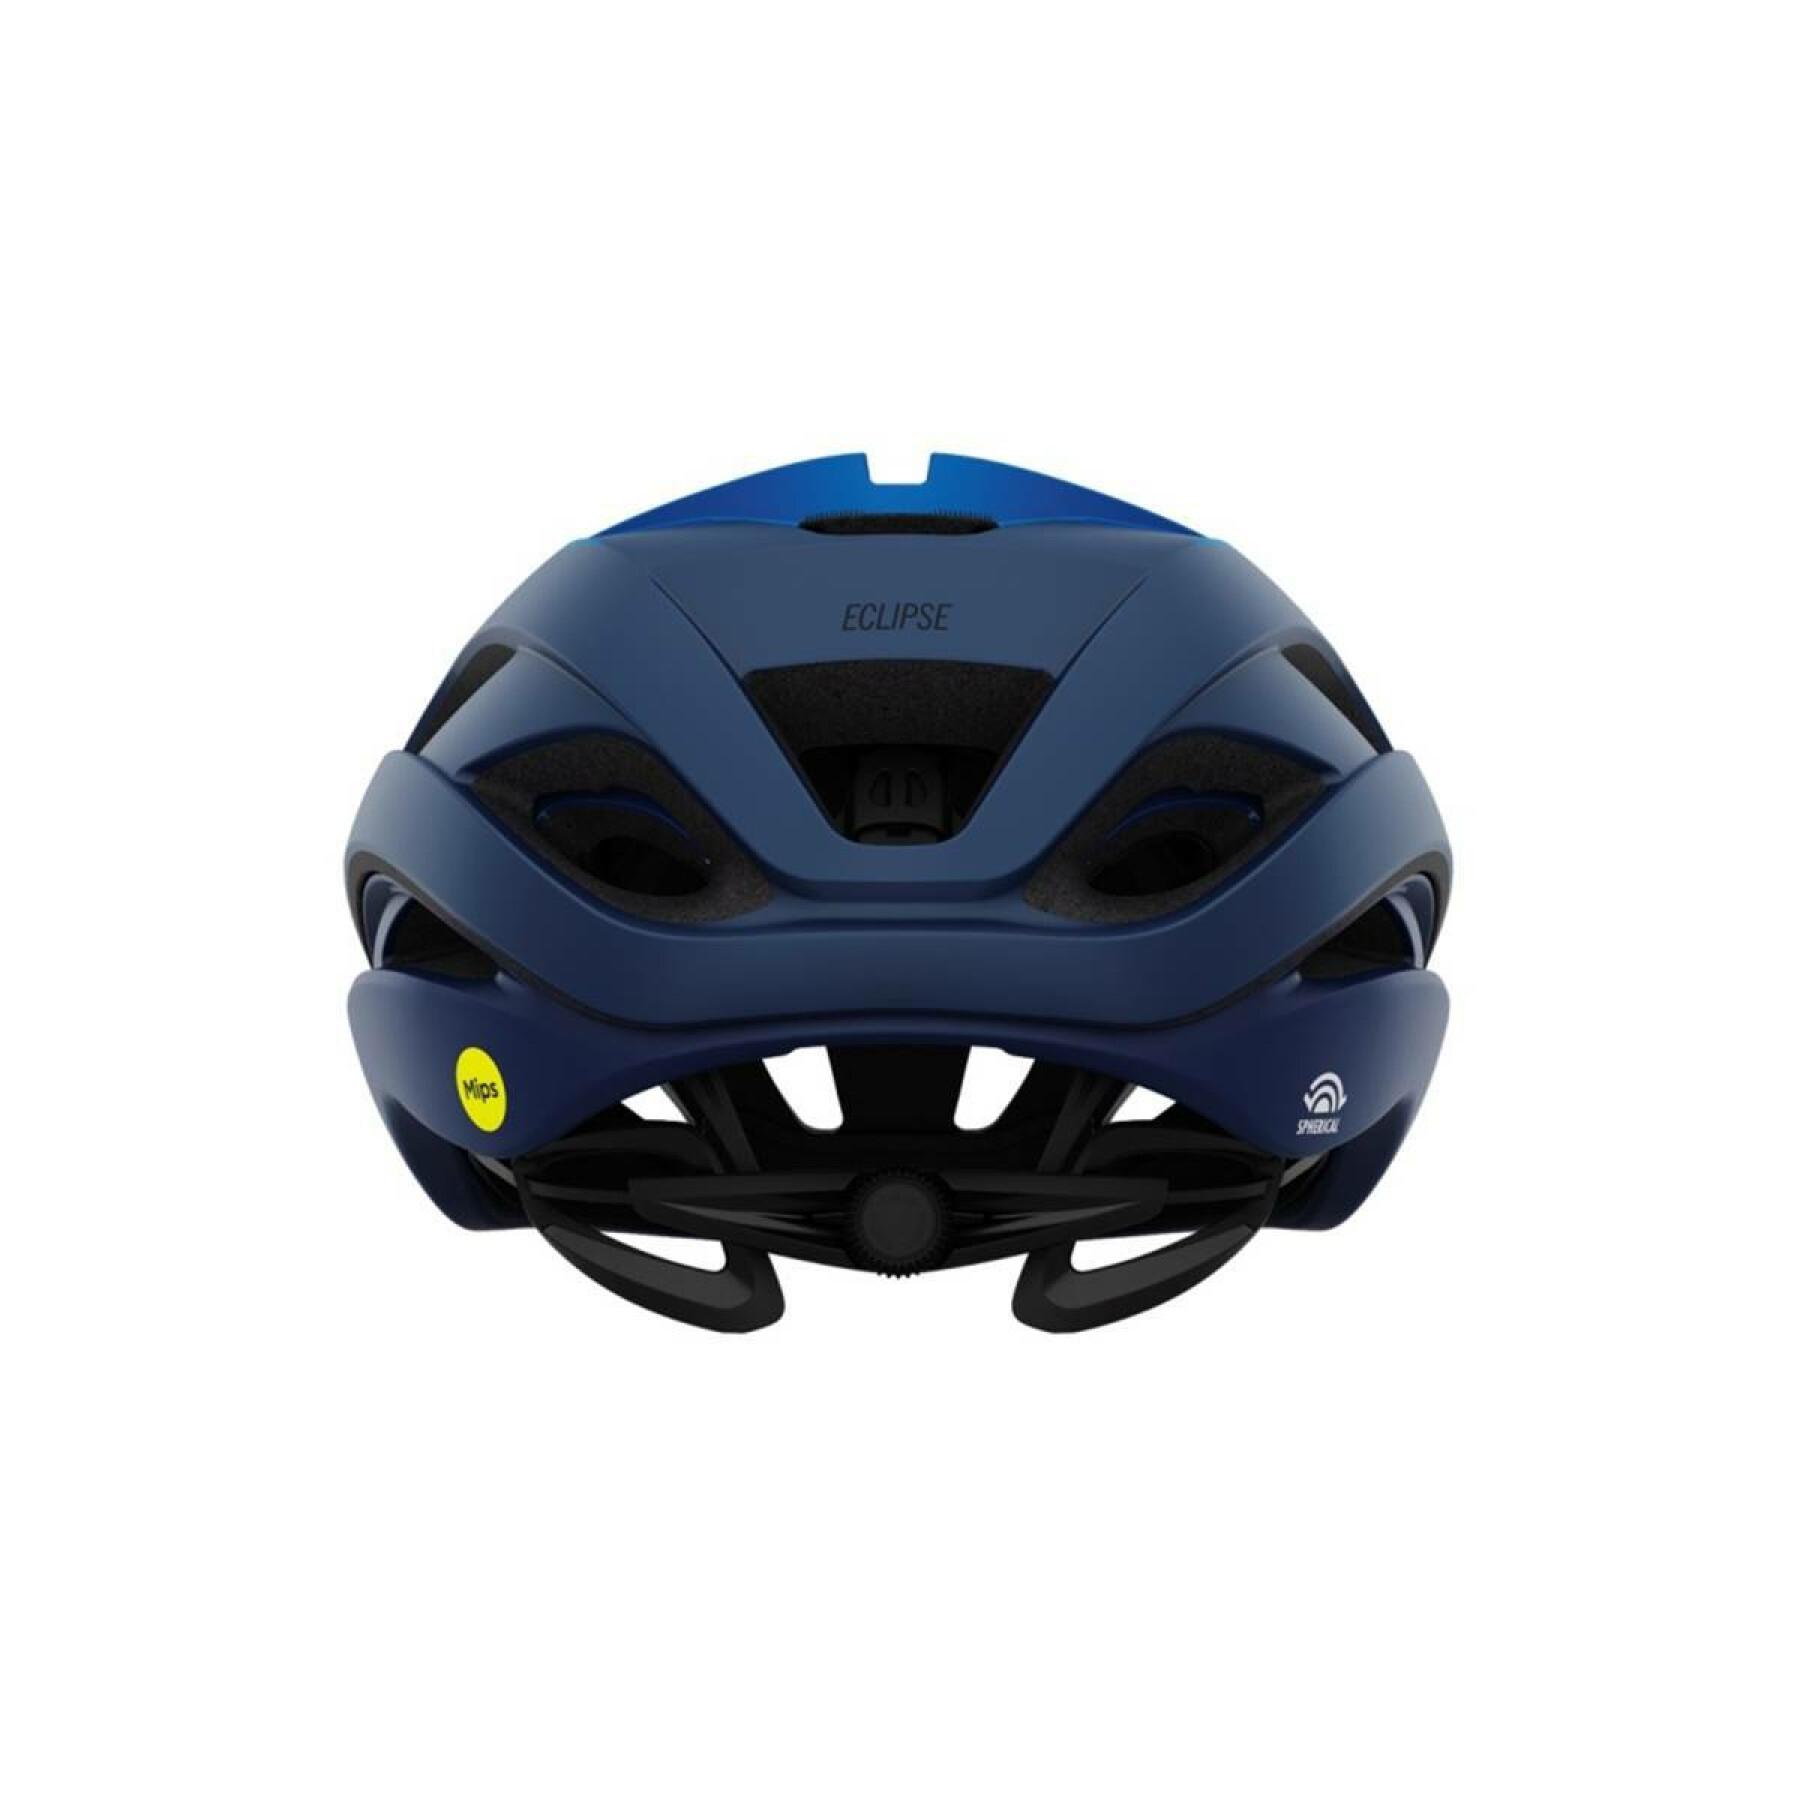 Bike helmet Giro Eclipse Spherical